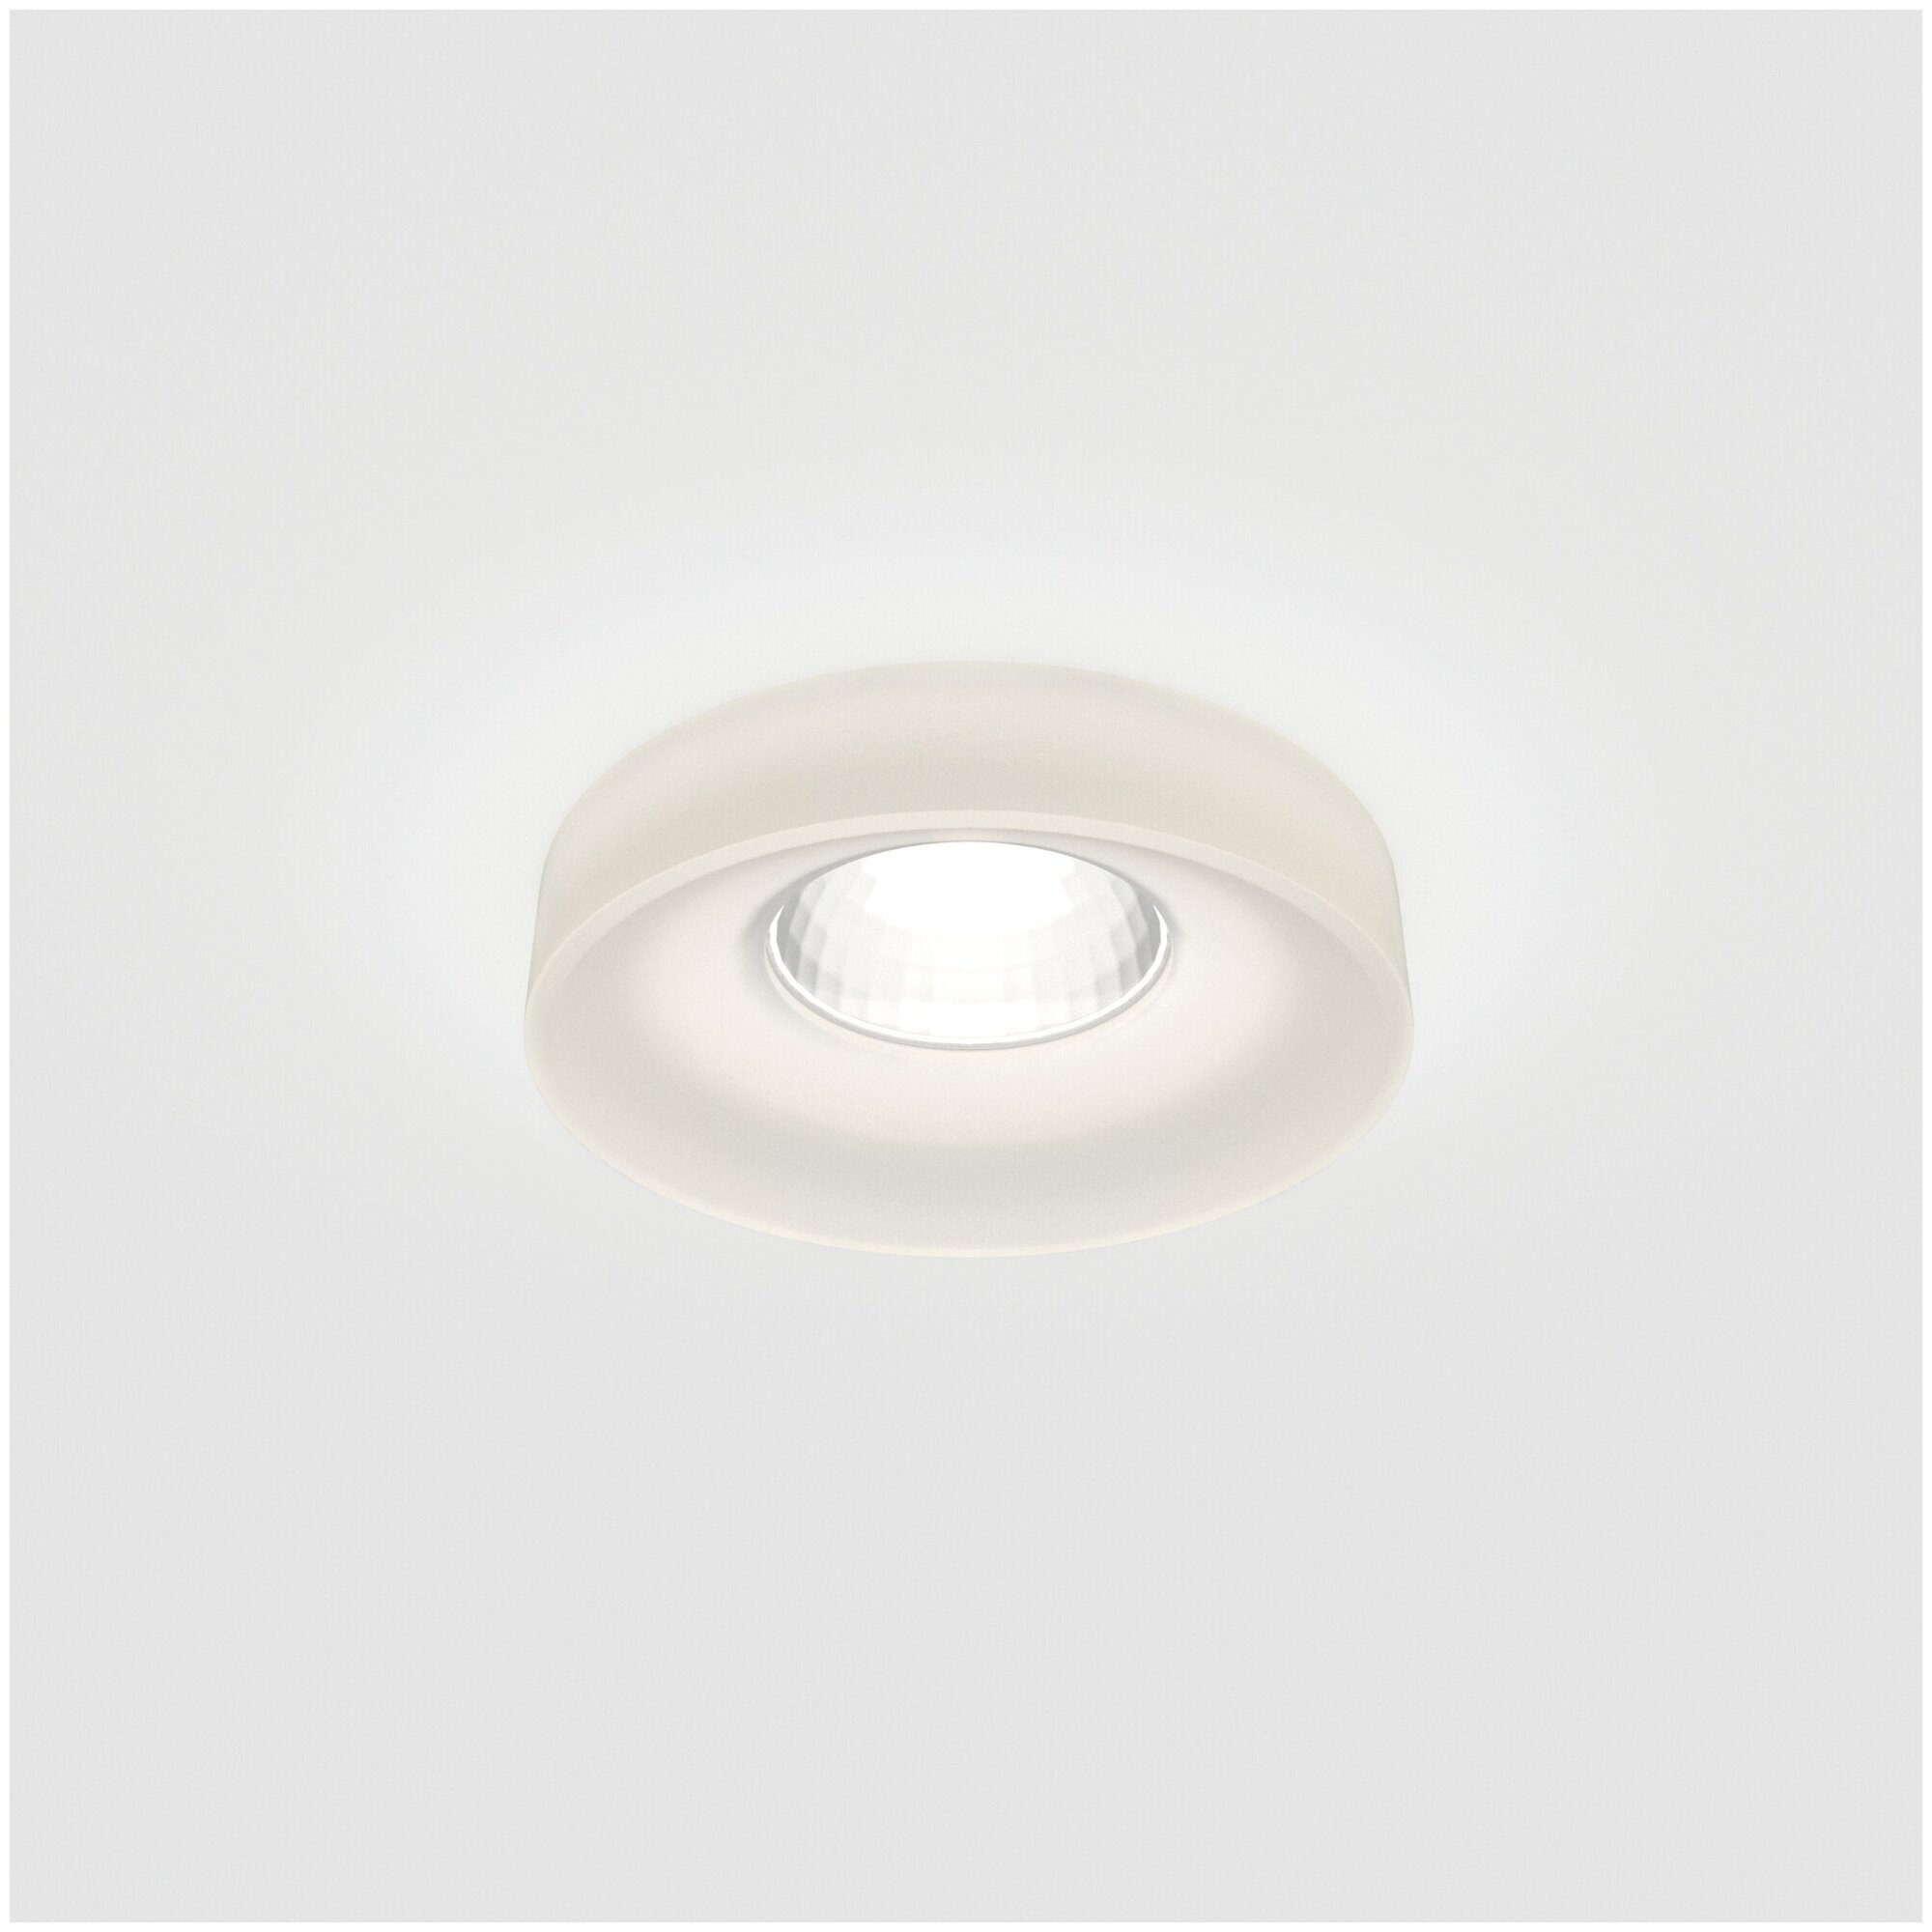 Светильник Elektrostandard 15268/LED, LED, 3 Вт, 4200, нейтральный белый, цвет арматуры: бесцветный, цвет плафона: бесцветный